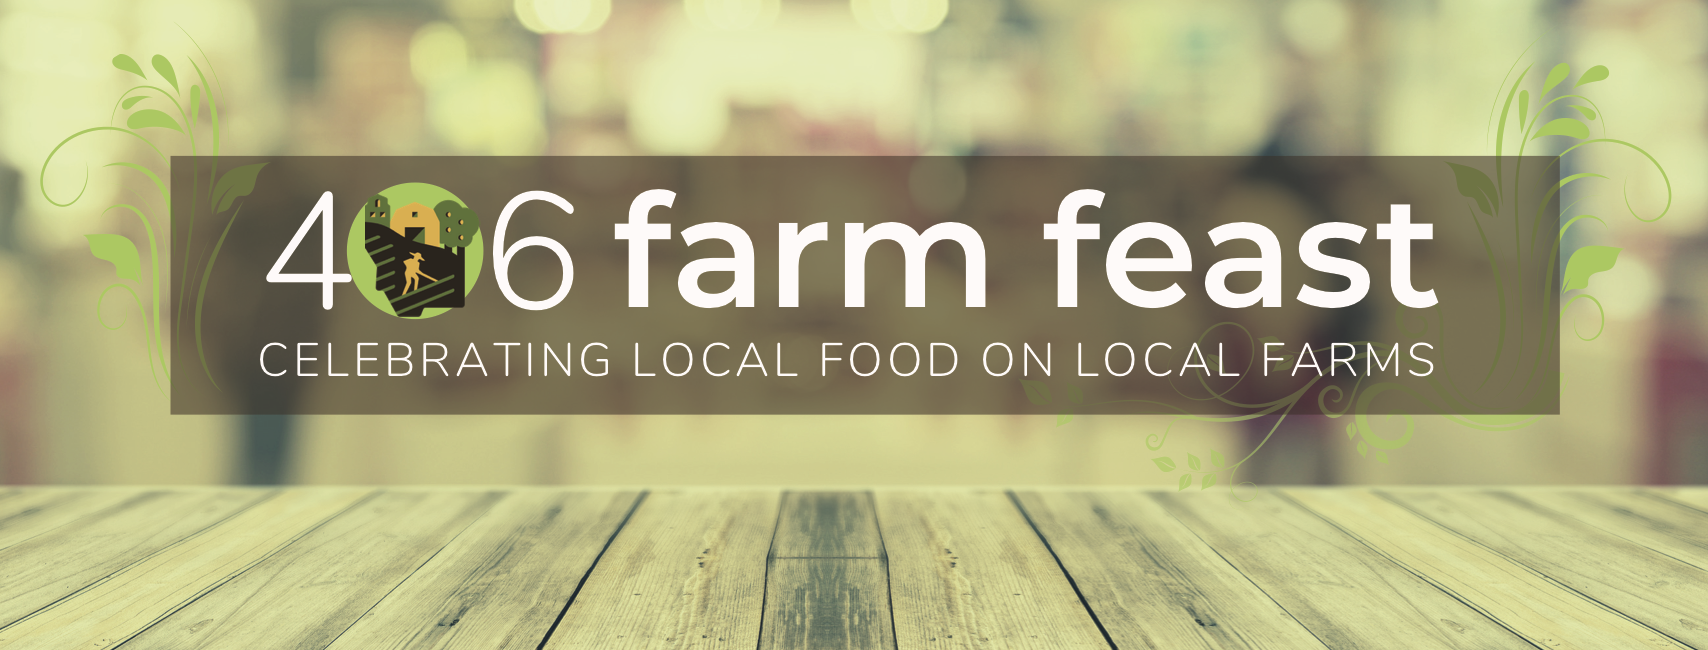 406 farm feast header